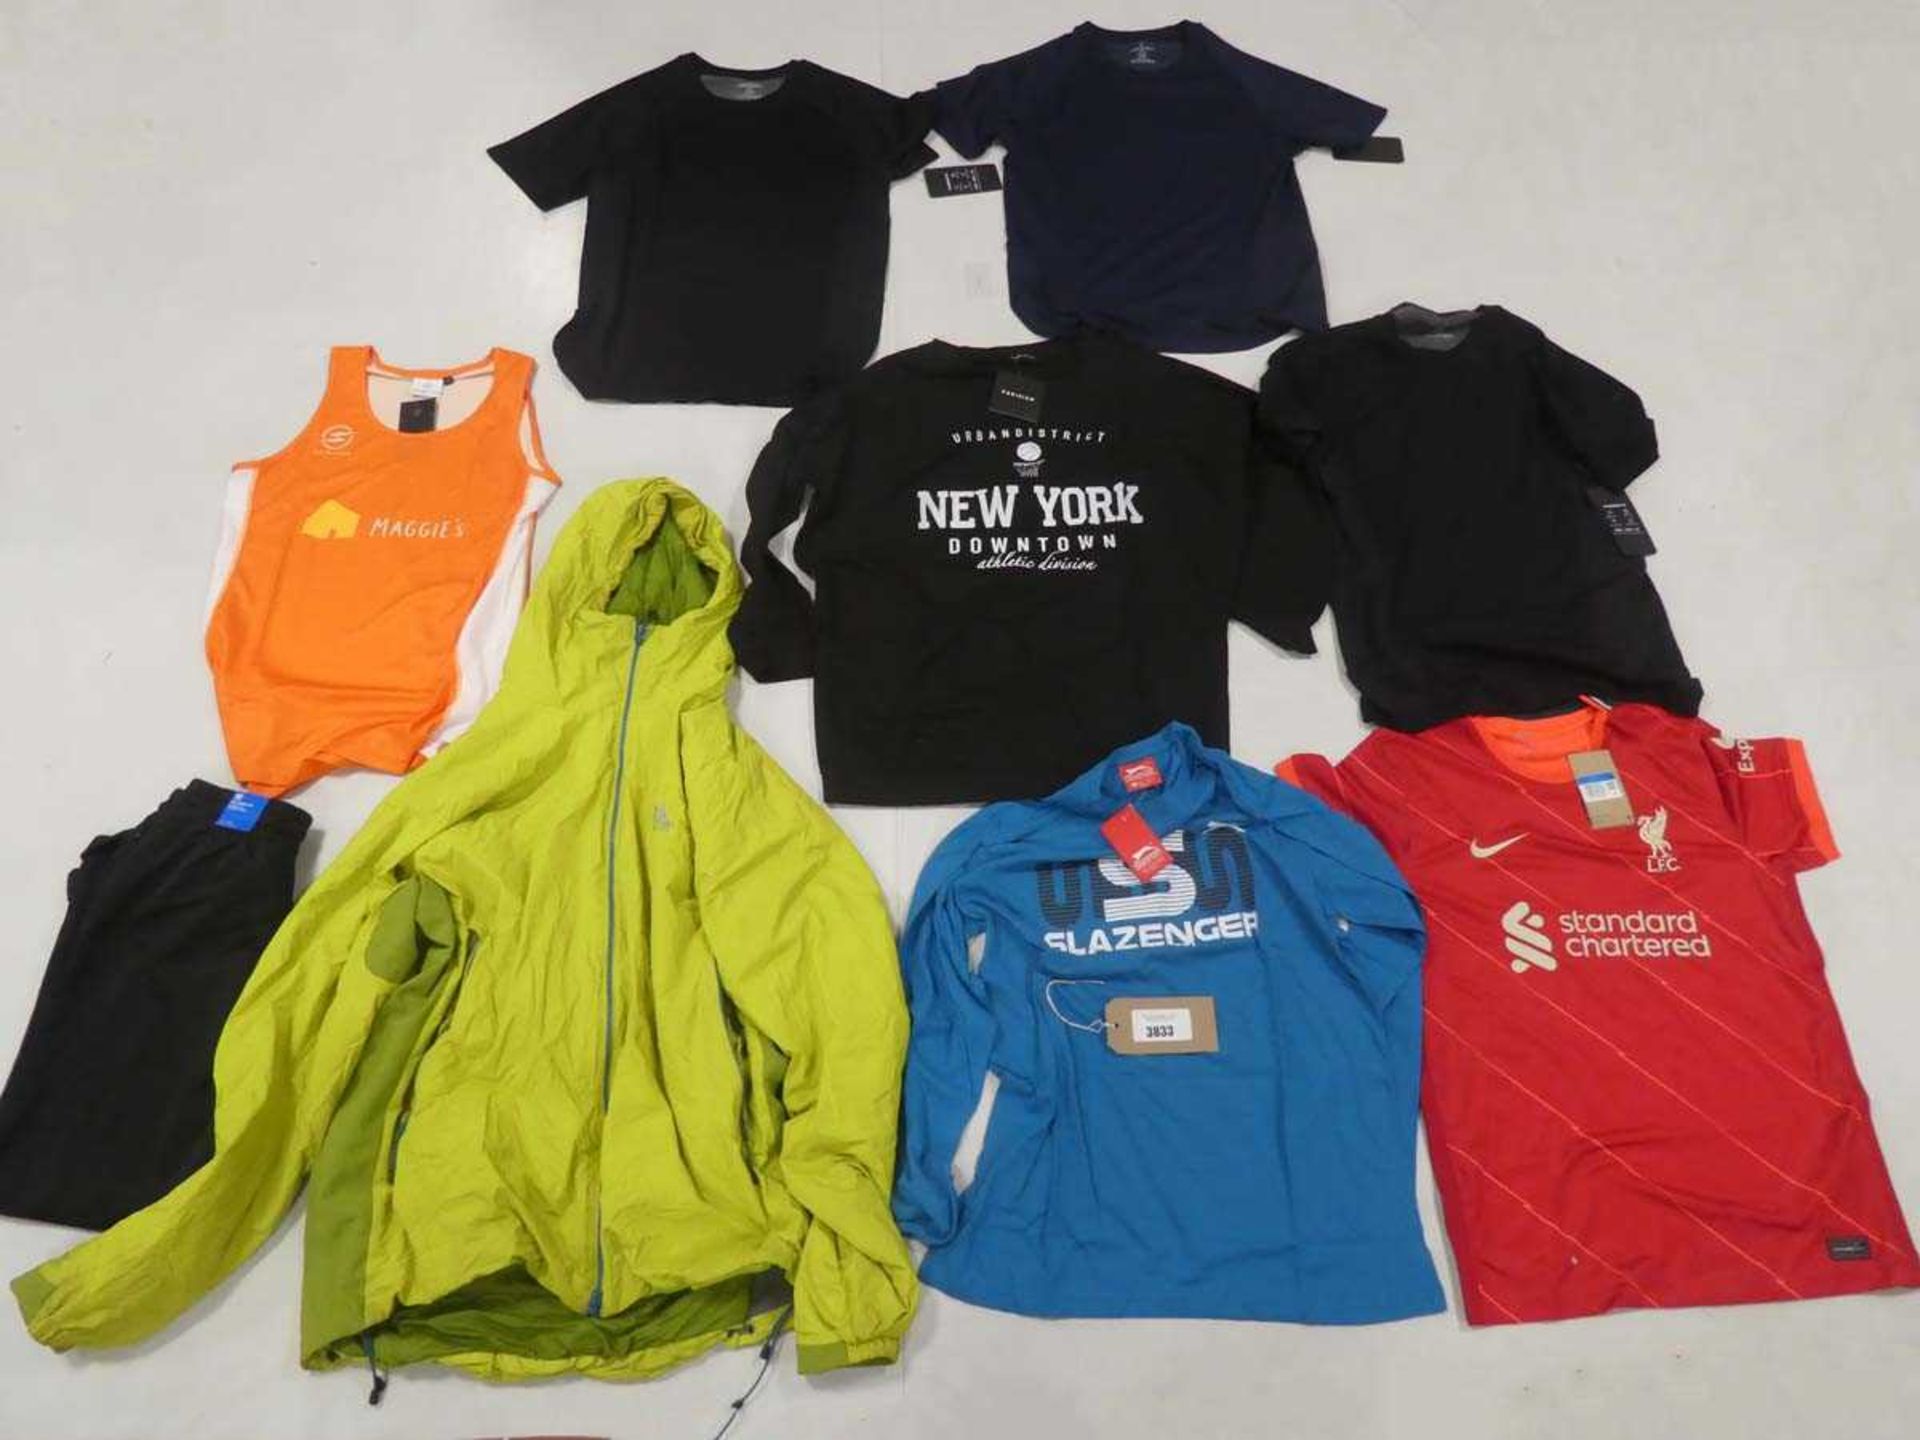 +VAT Bag containing selection of sportswear including Nike, Slazenger, Adidas etc